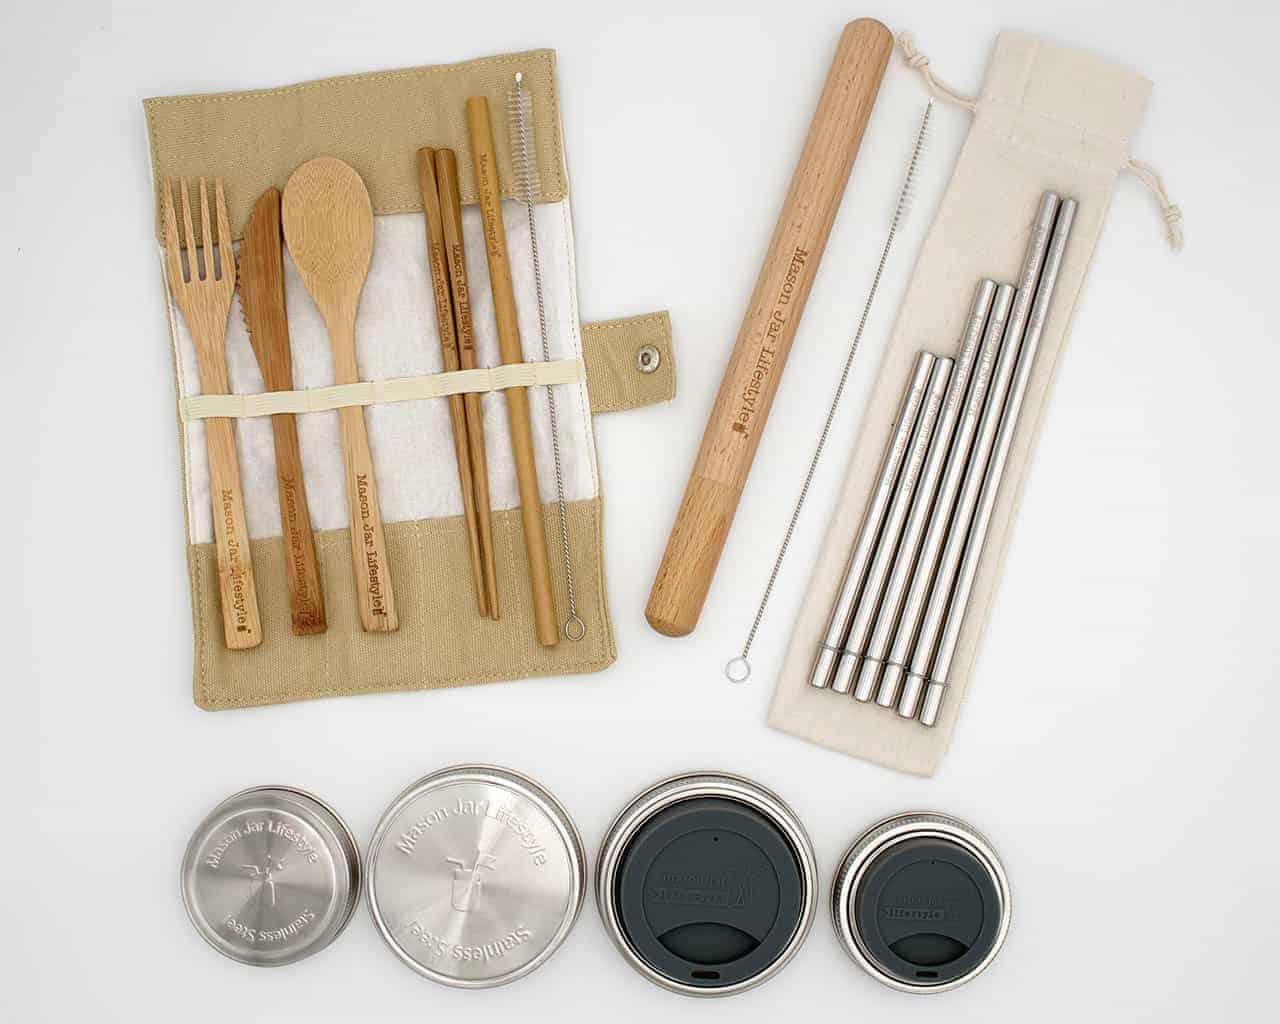 mason-jar-lifestyle-zero-waste-kit-stainless-steel-storage-lids-bamboo-utensils-silicone-drinking-lids-metal-straws-cloth-bag